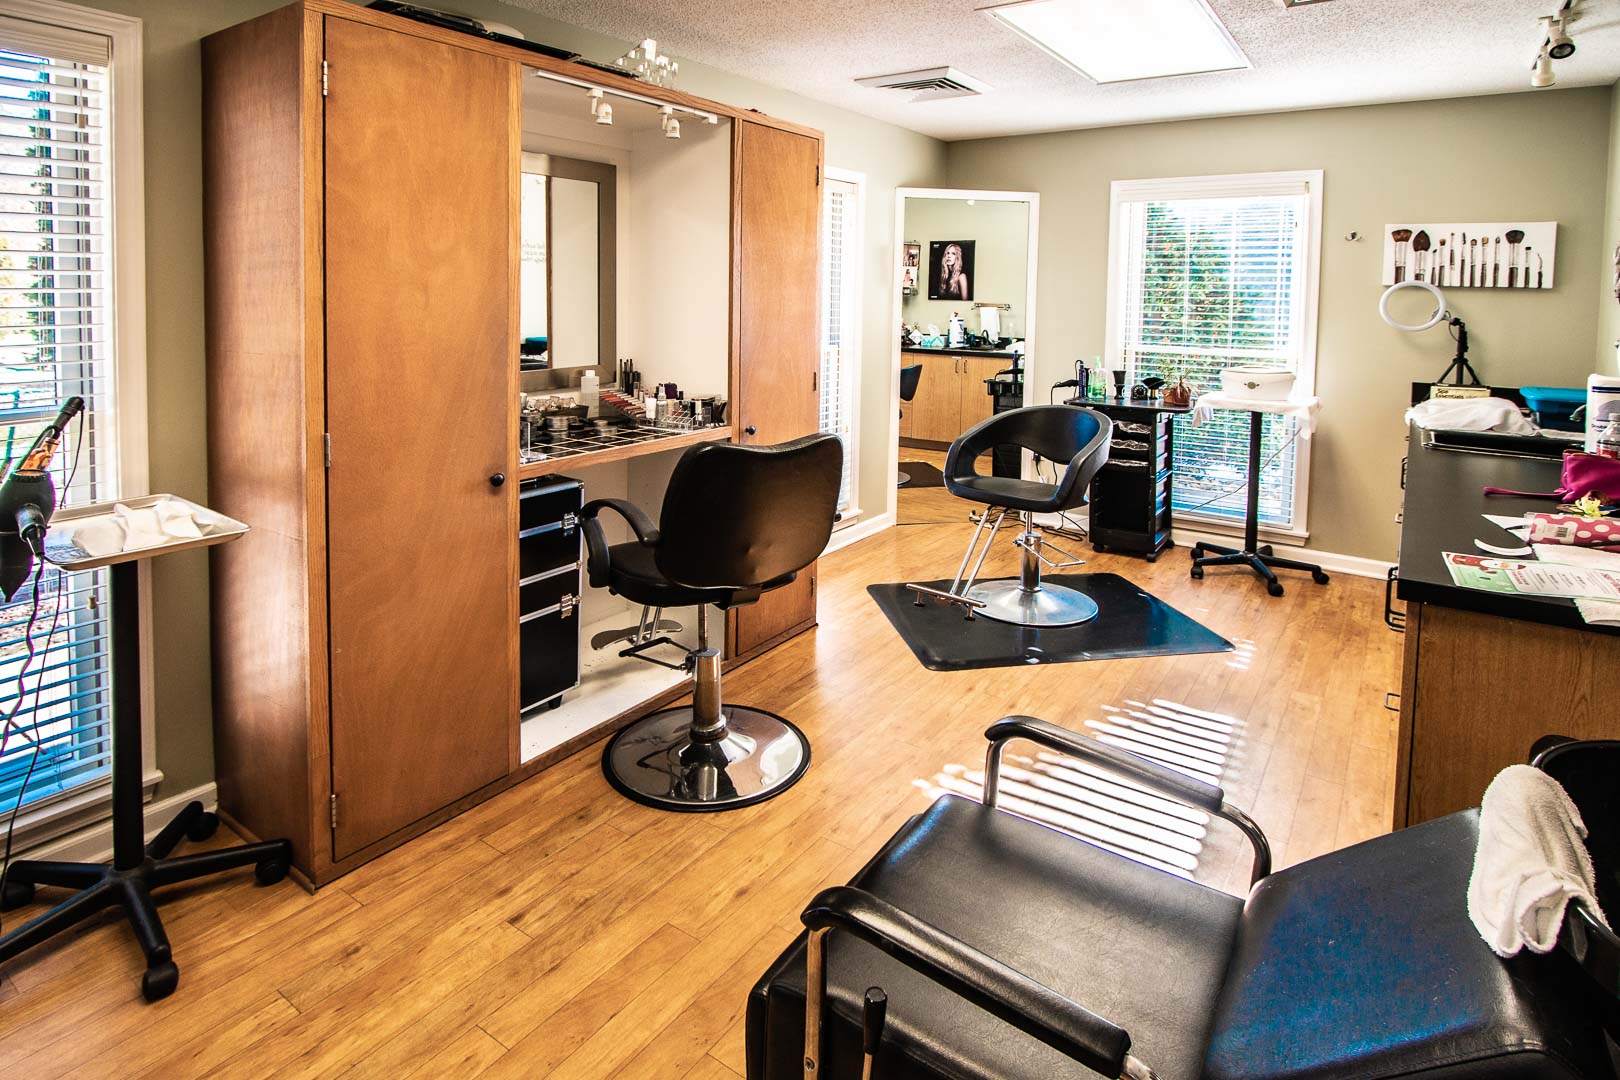 Hair salon available at VRI's Fox Run Resort in North Carolina.